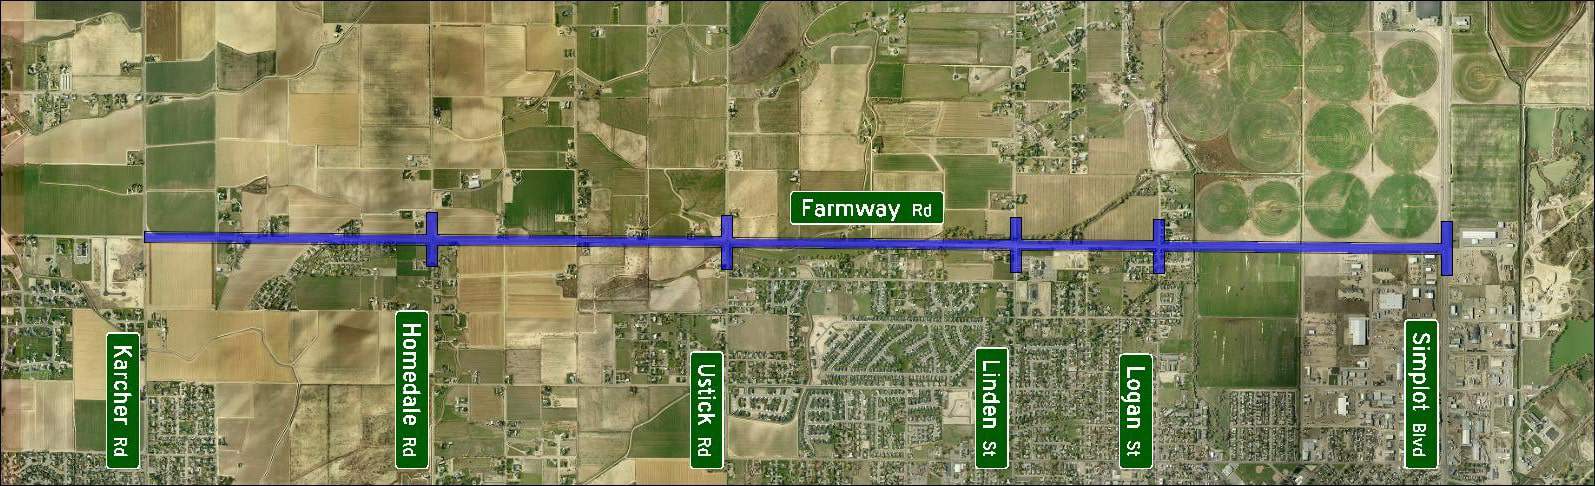 Farmway Corridor Study - Project Map - LANDSCAPE Orientation - Large Size